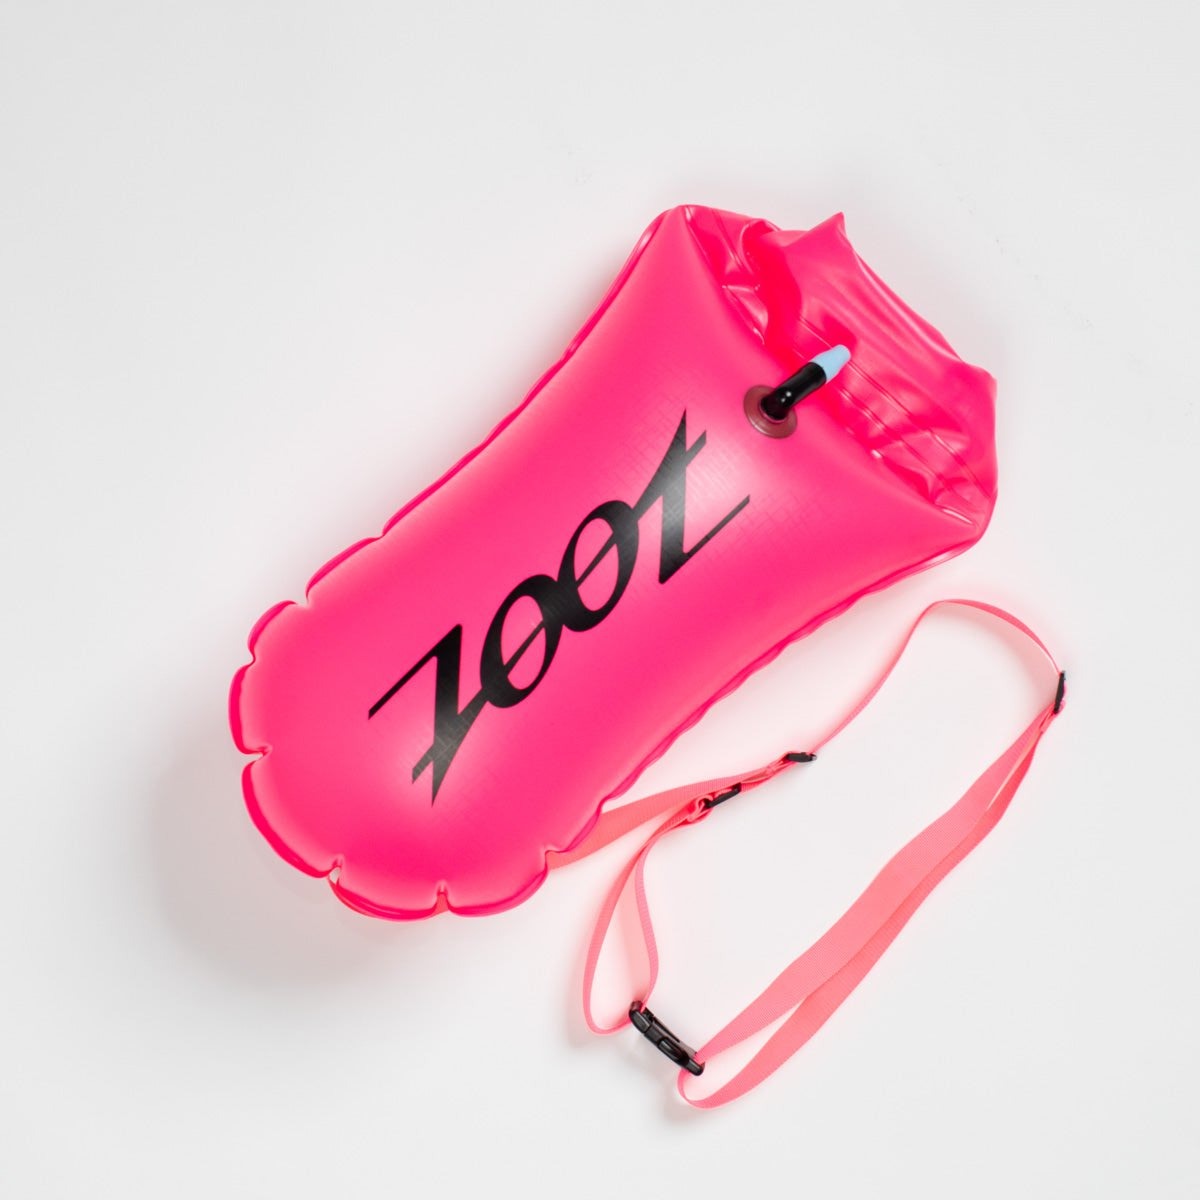 Zoot Sports SWIM ACCESSORIES Ultra Swim Safety Buoy & Dry Bag - Neon Pink